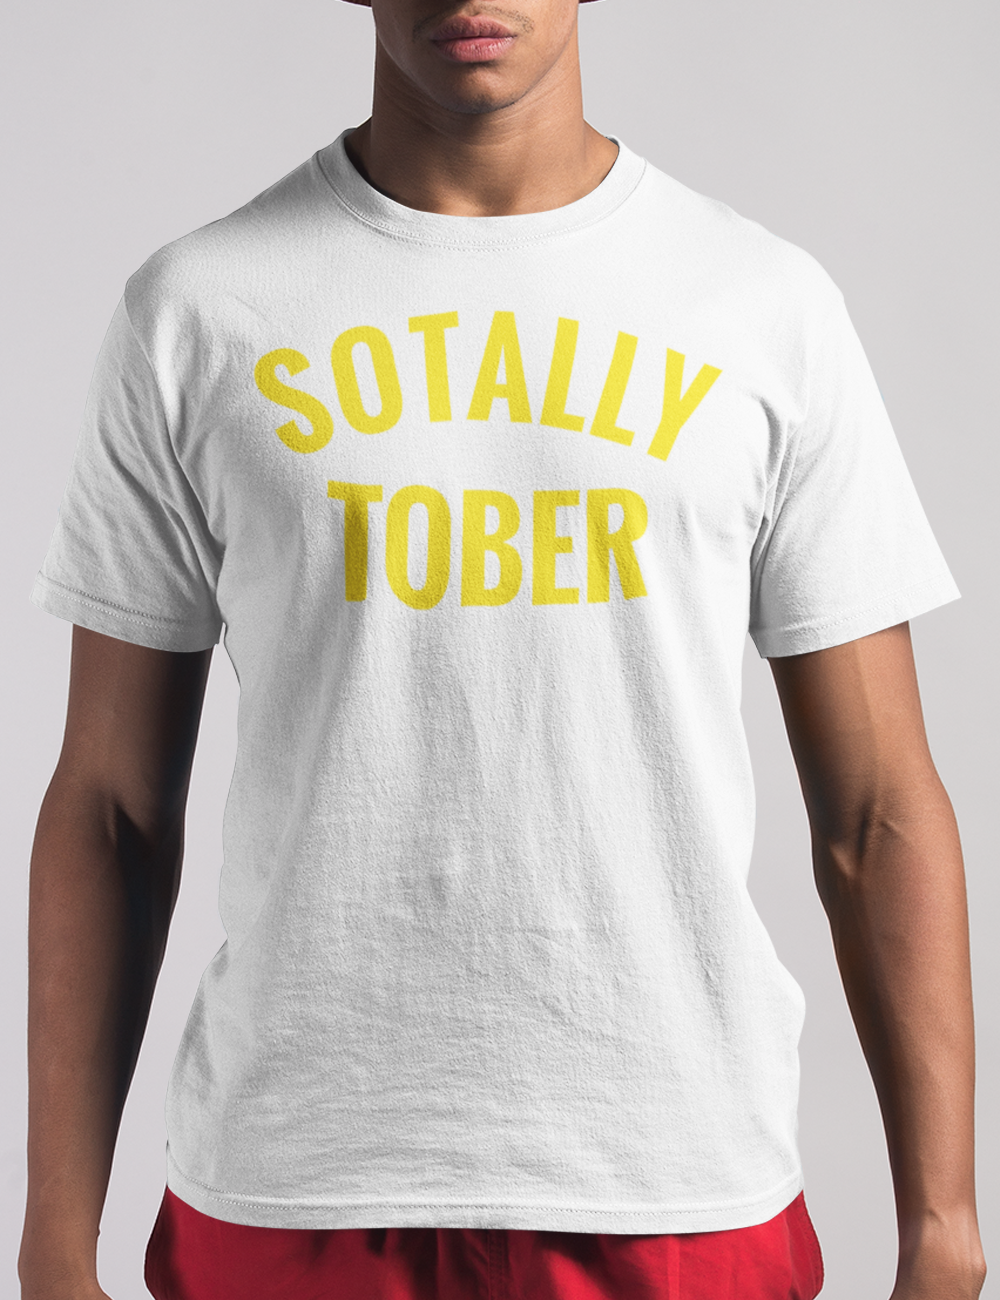 Sotally Tober Men's Classic T-Shirt OniTakai